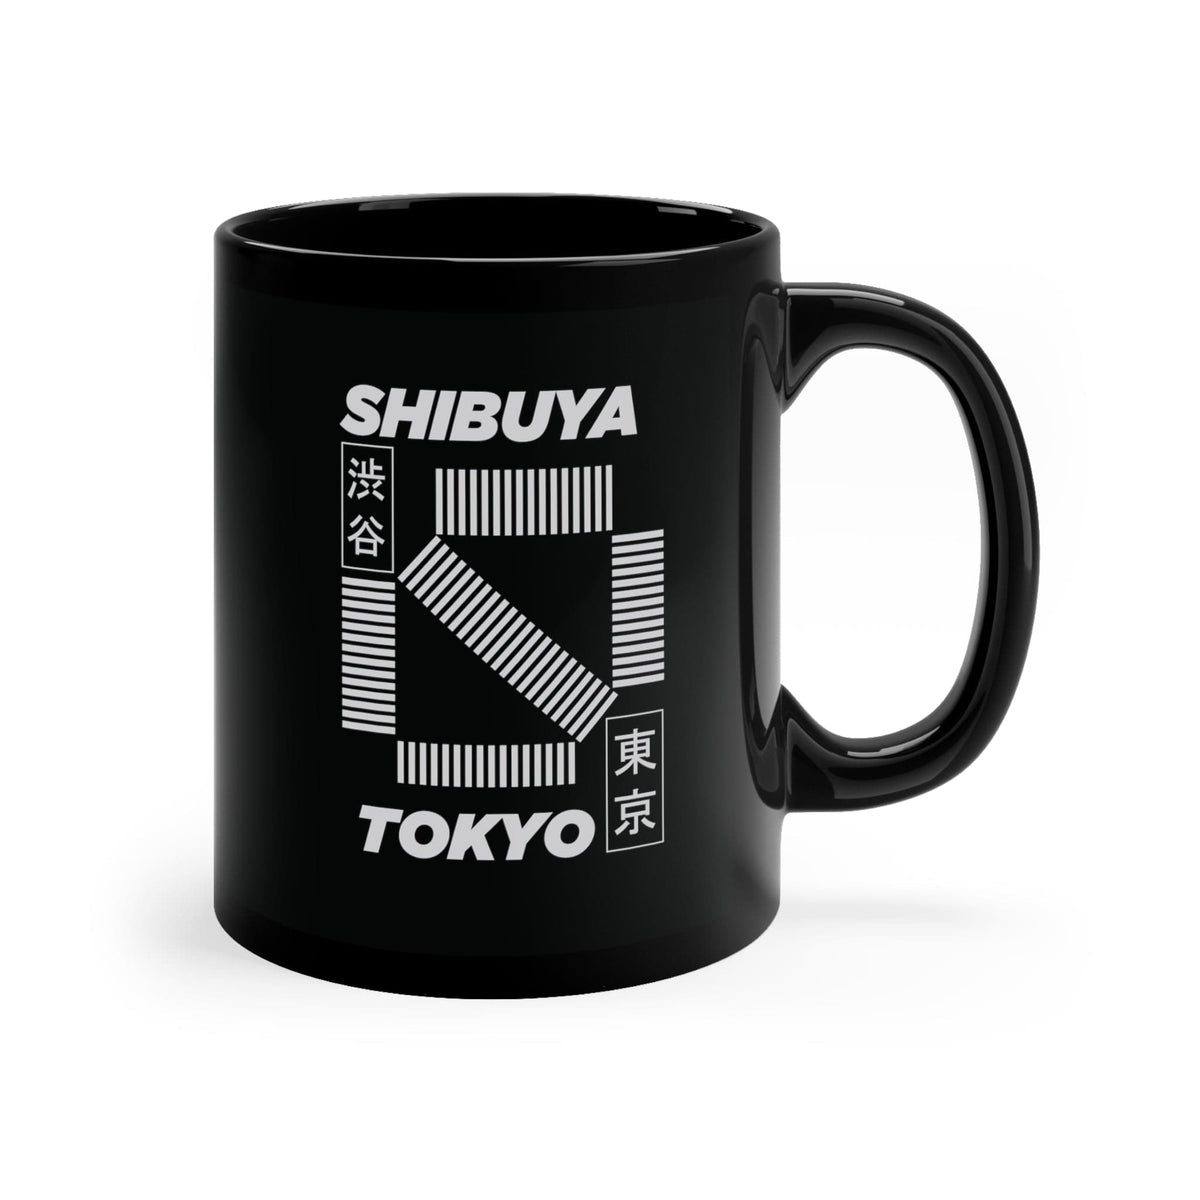 Shibuya Crossing Coffee Mug 11oz